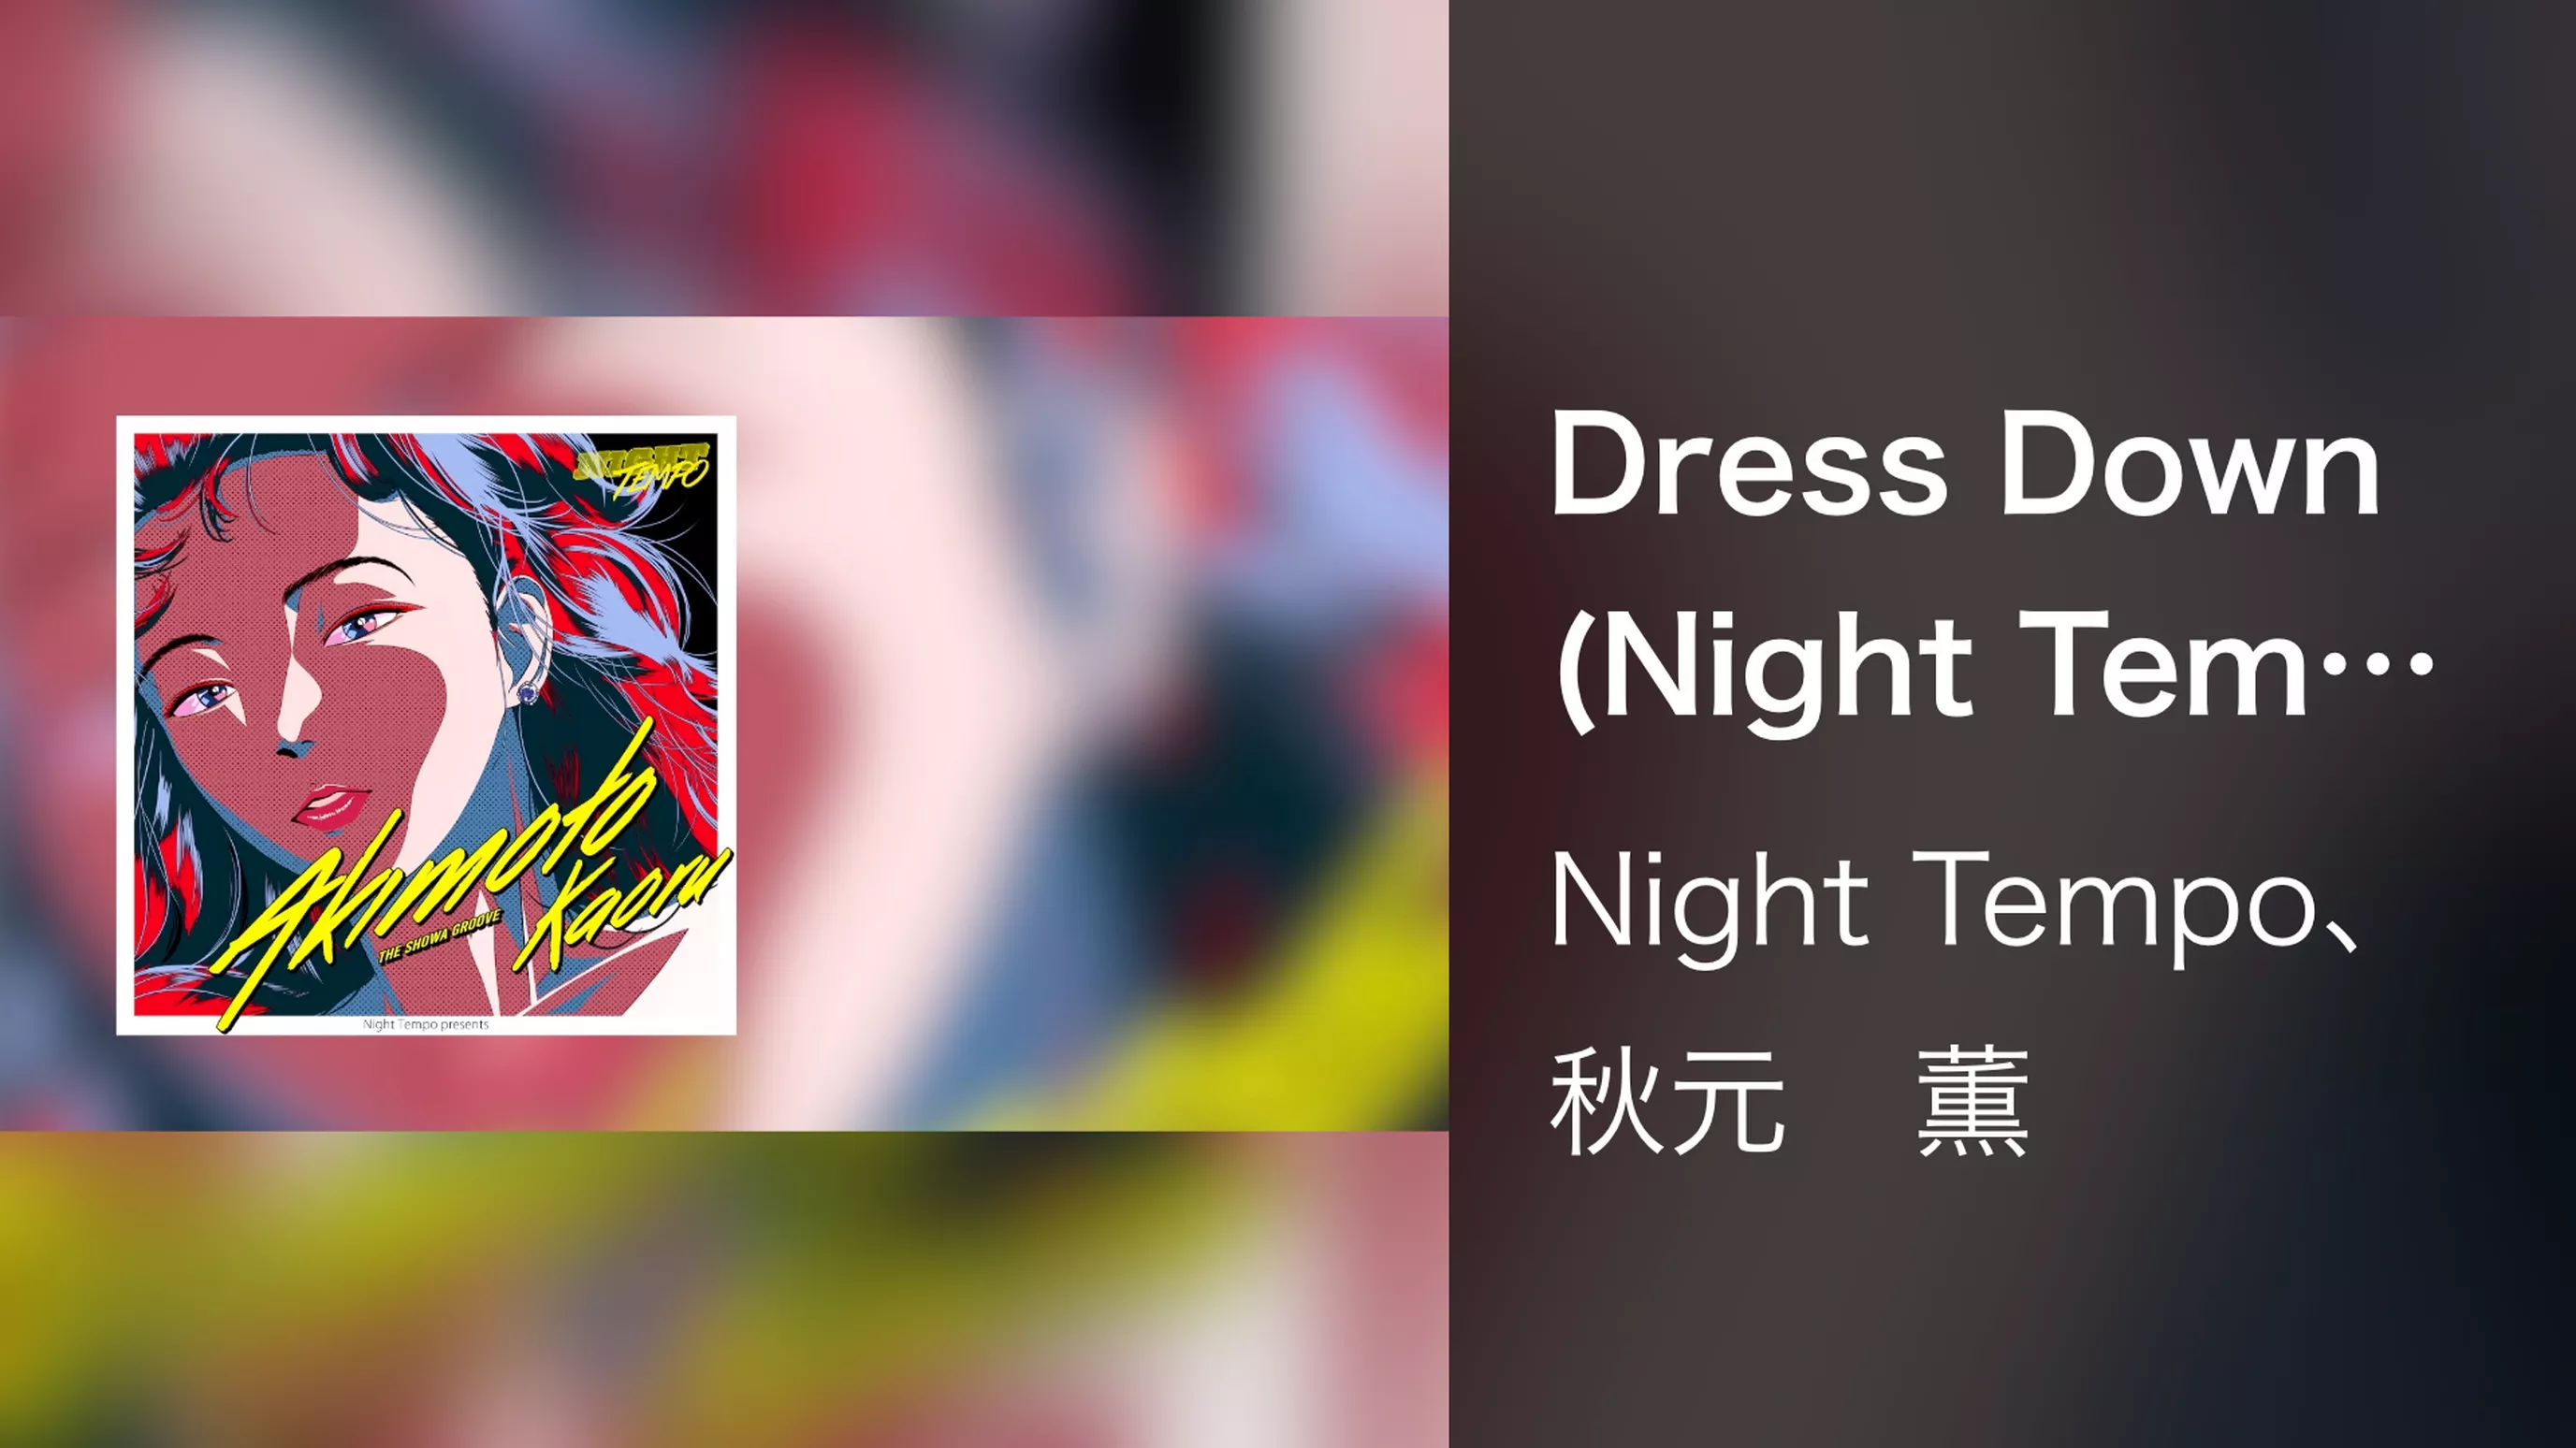 Dress Down (Night Tempo Showa Groove Mix)